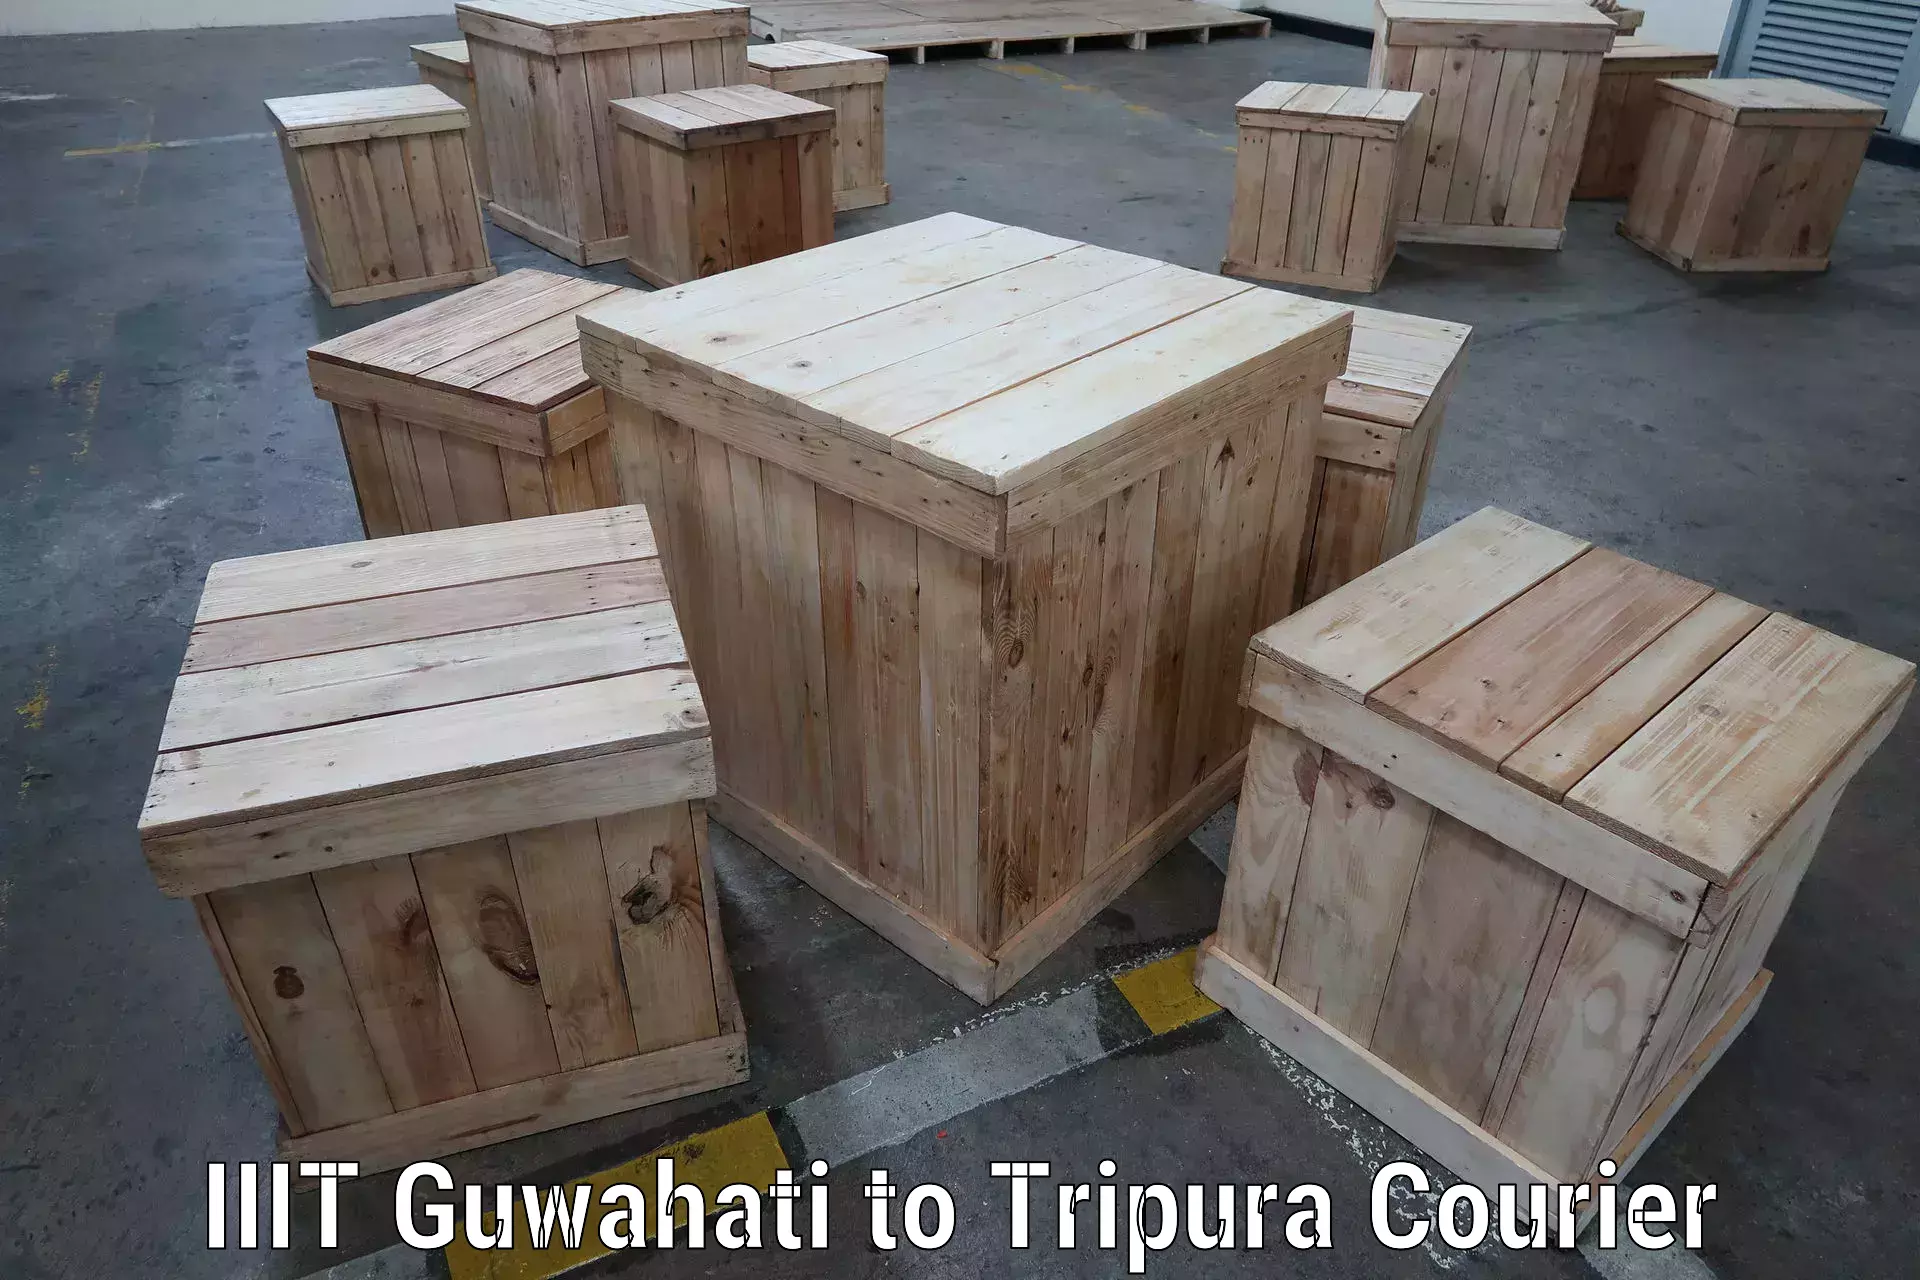 Courier insurance IIIT Guwahati to Udaipur Tripura